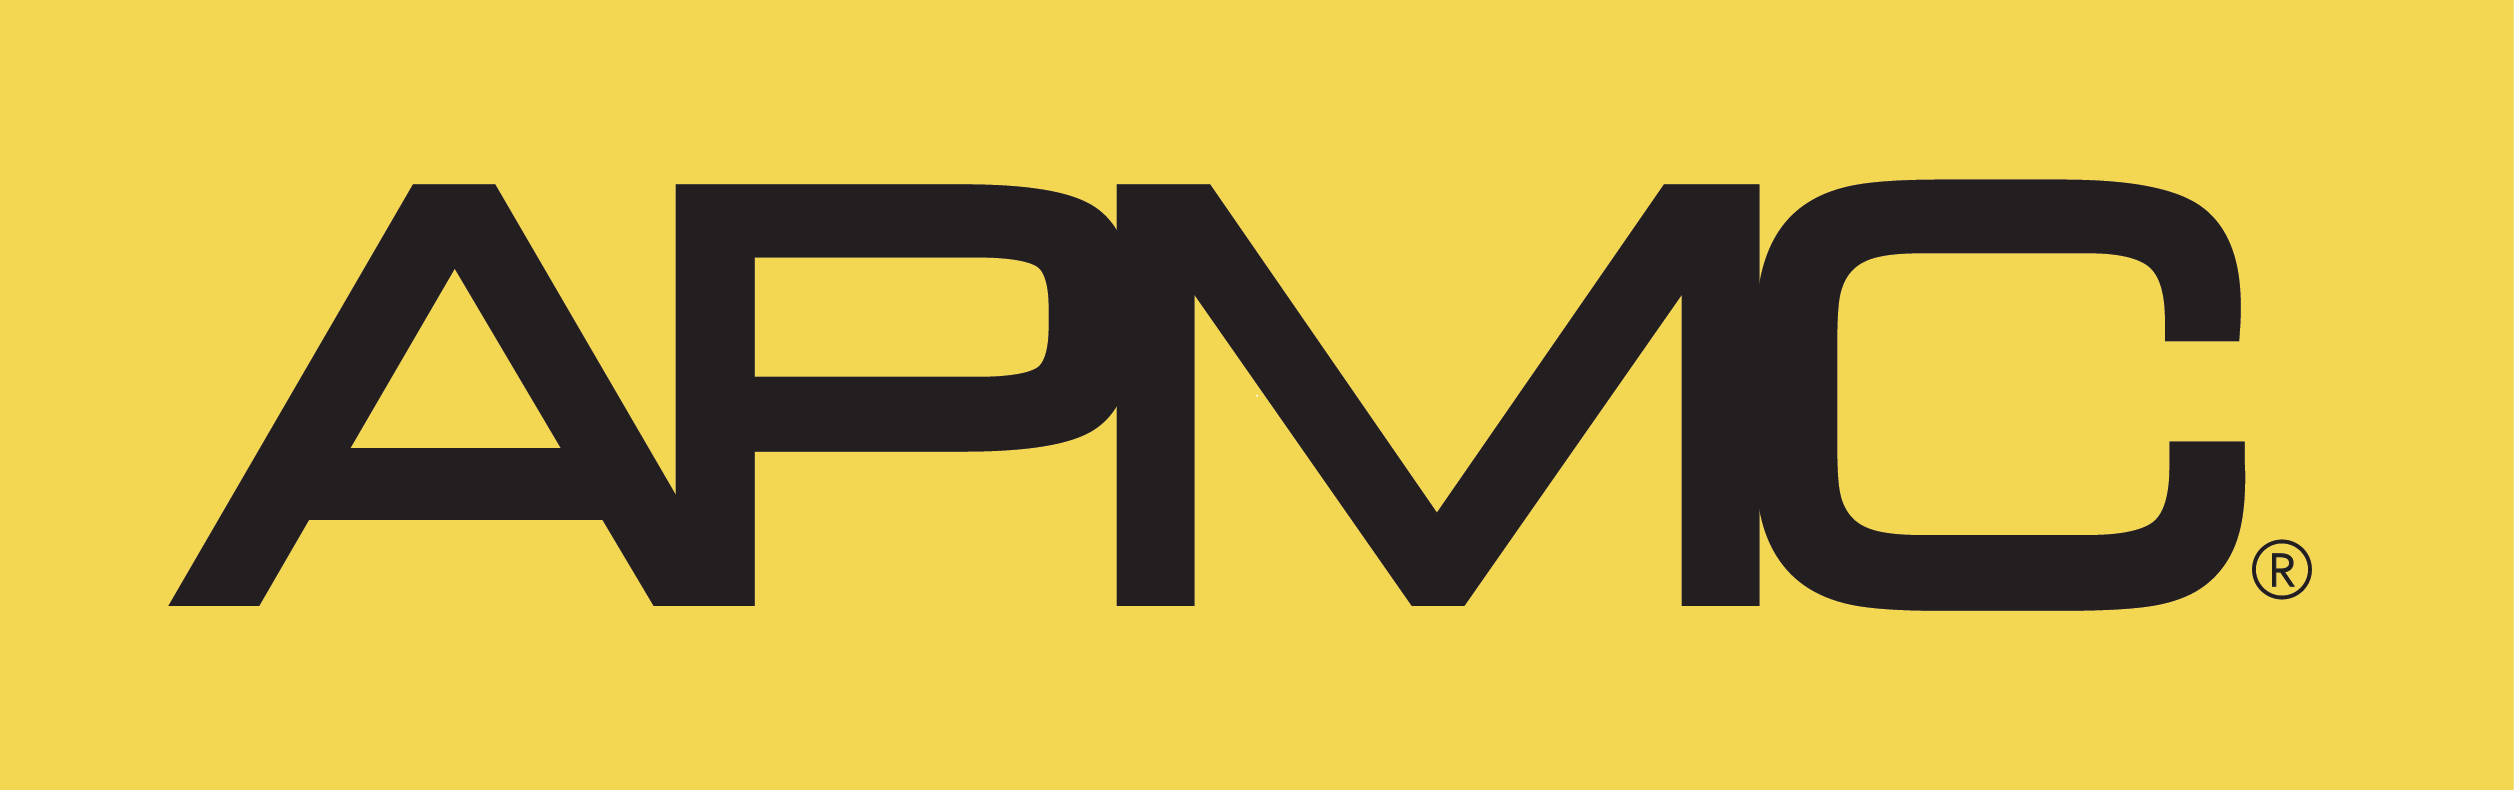 Yello Logo - APMC (Pty) Ltd – yello logo